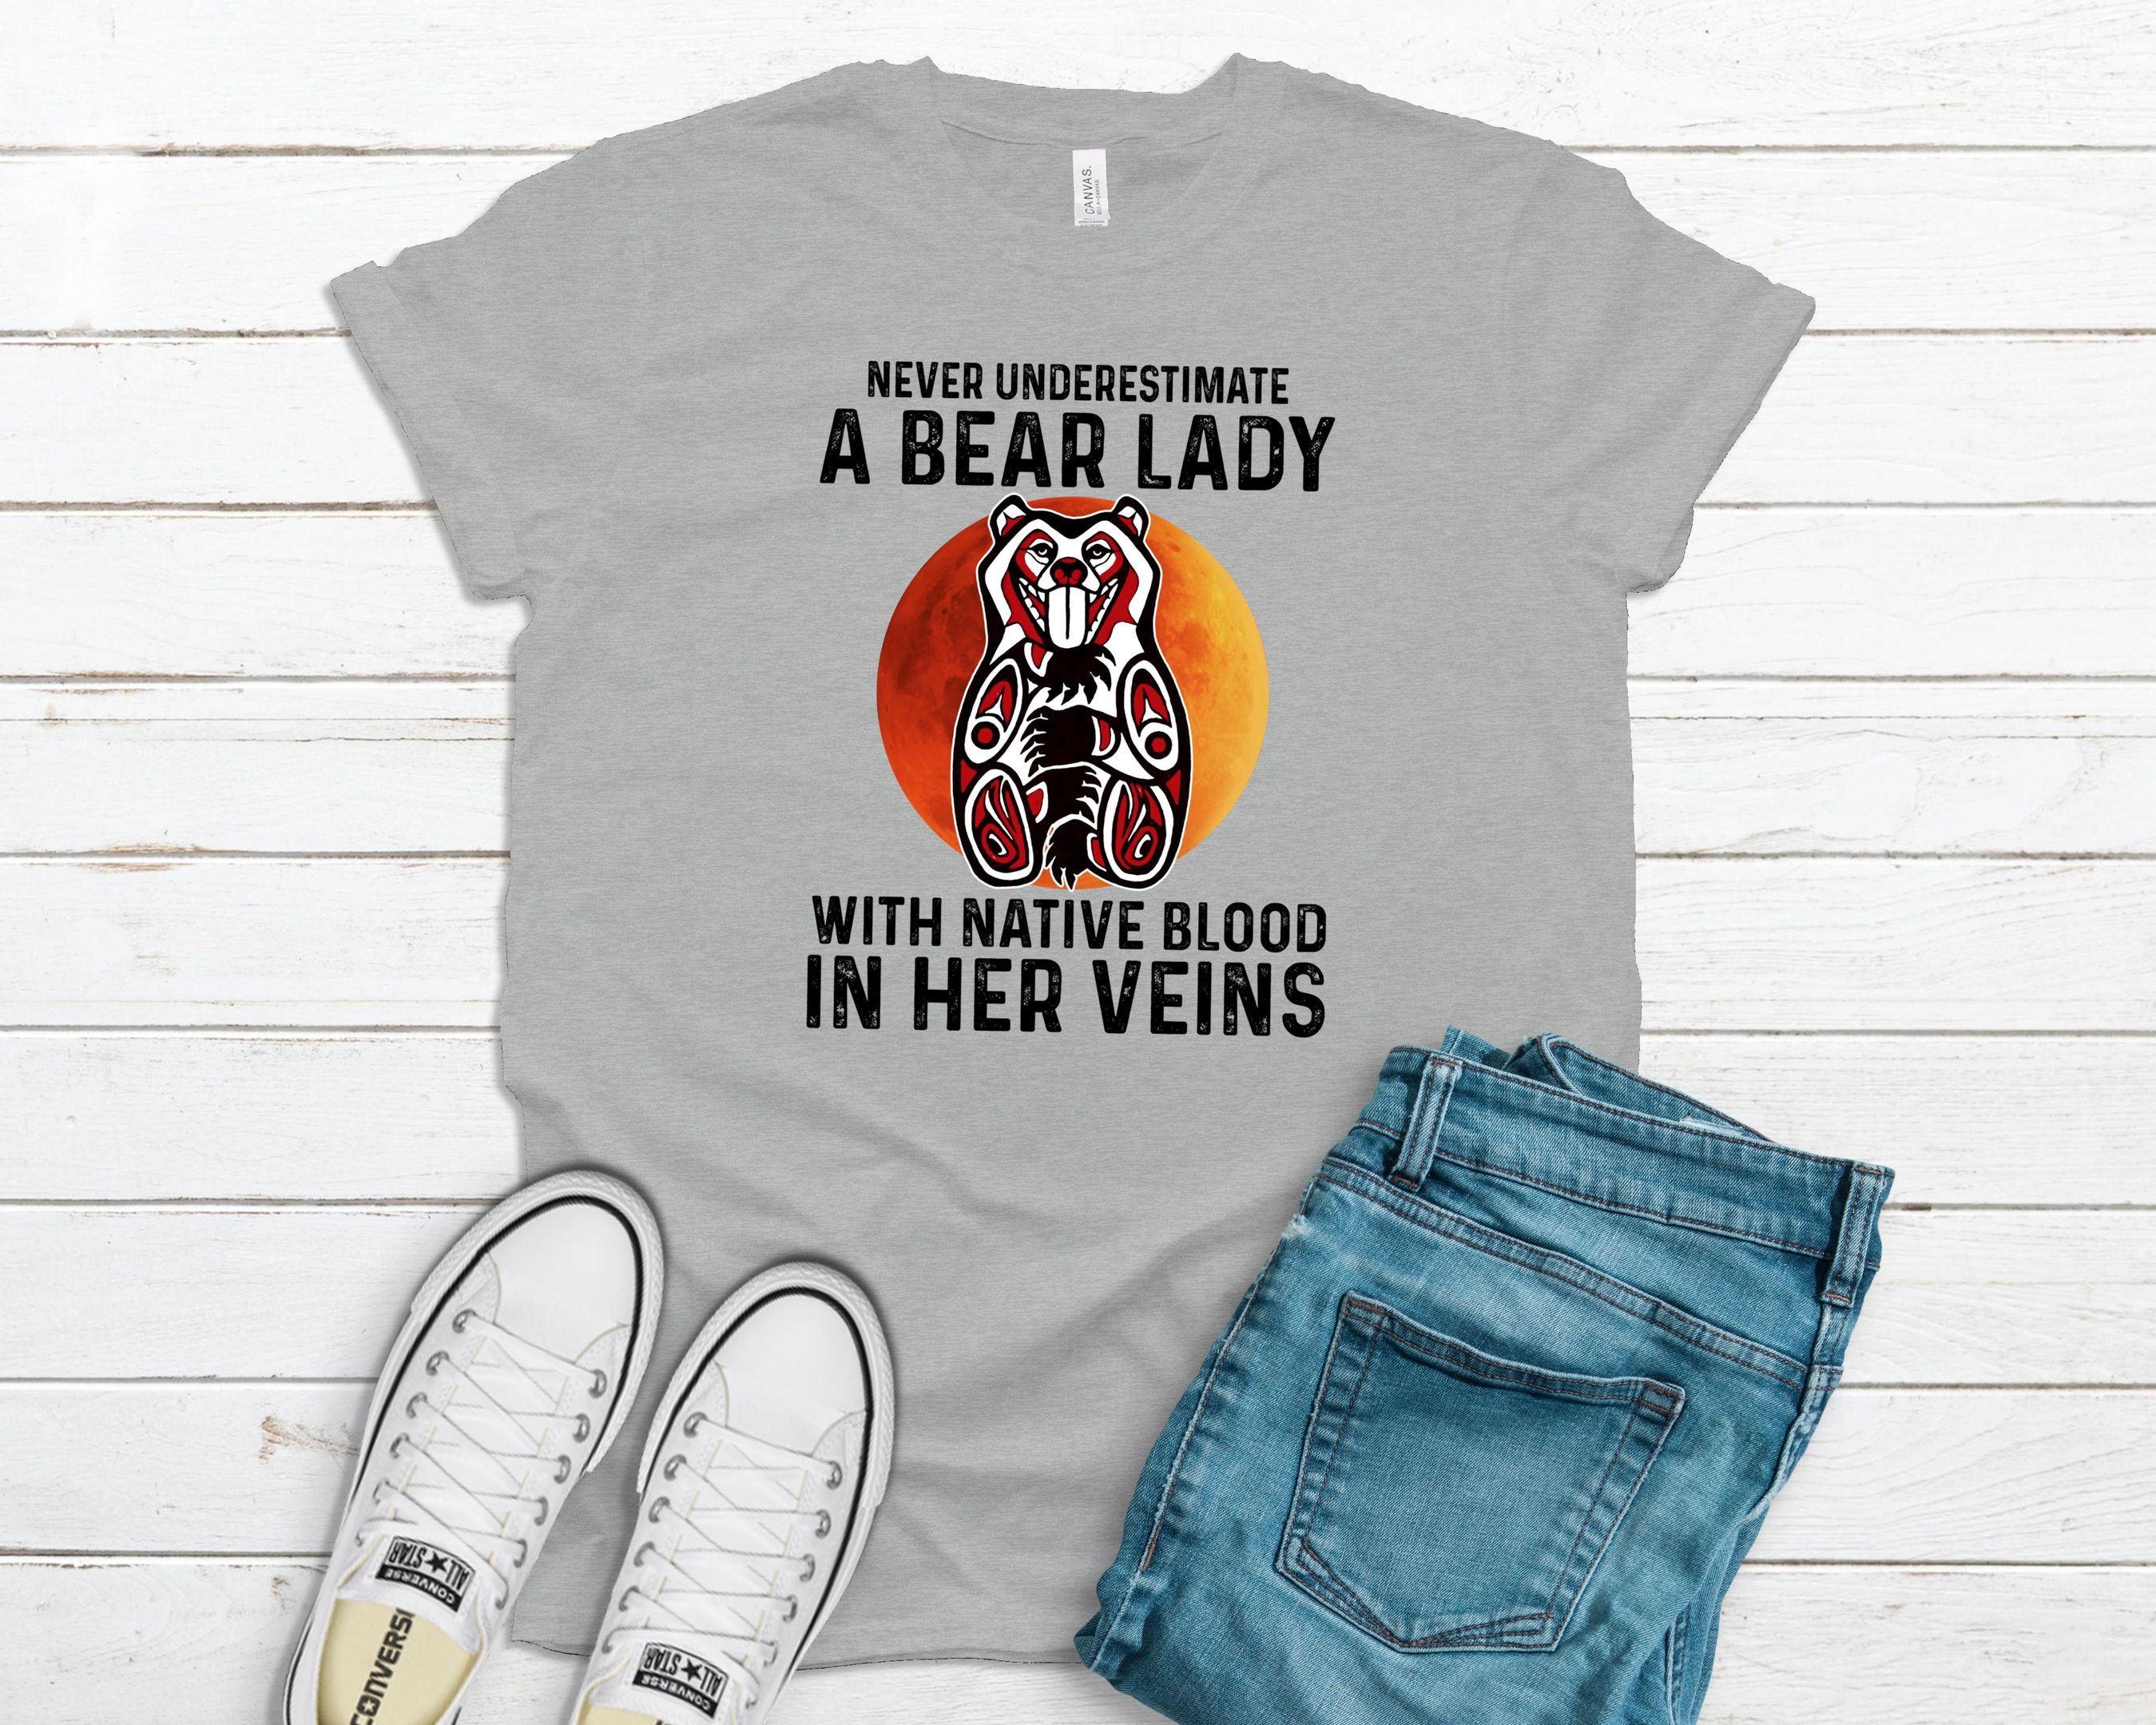 A Bear Lady Shirt, Native Blood Shirt, Native American Zodiac Sign Shirt